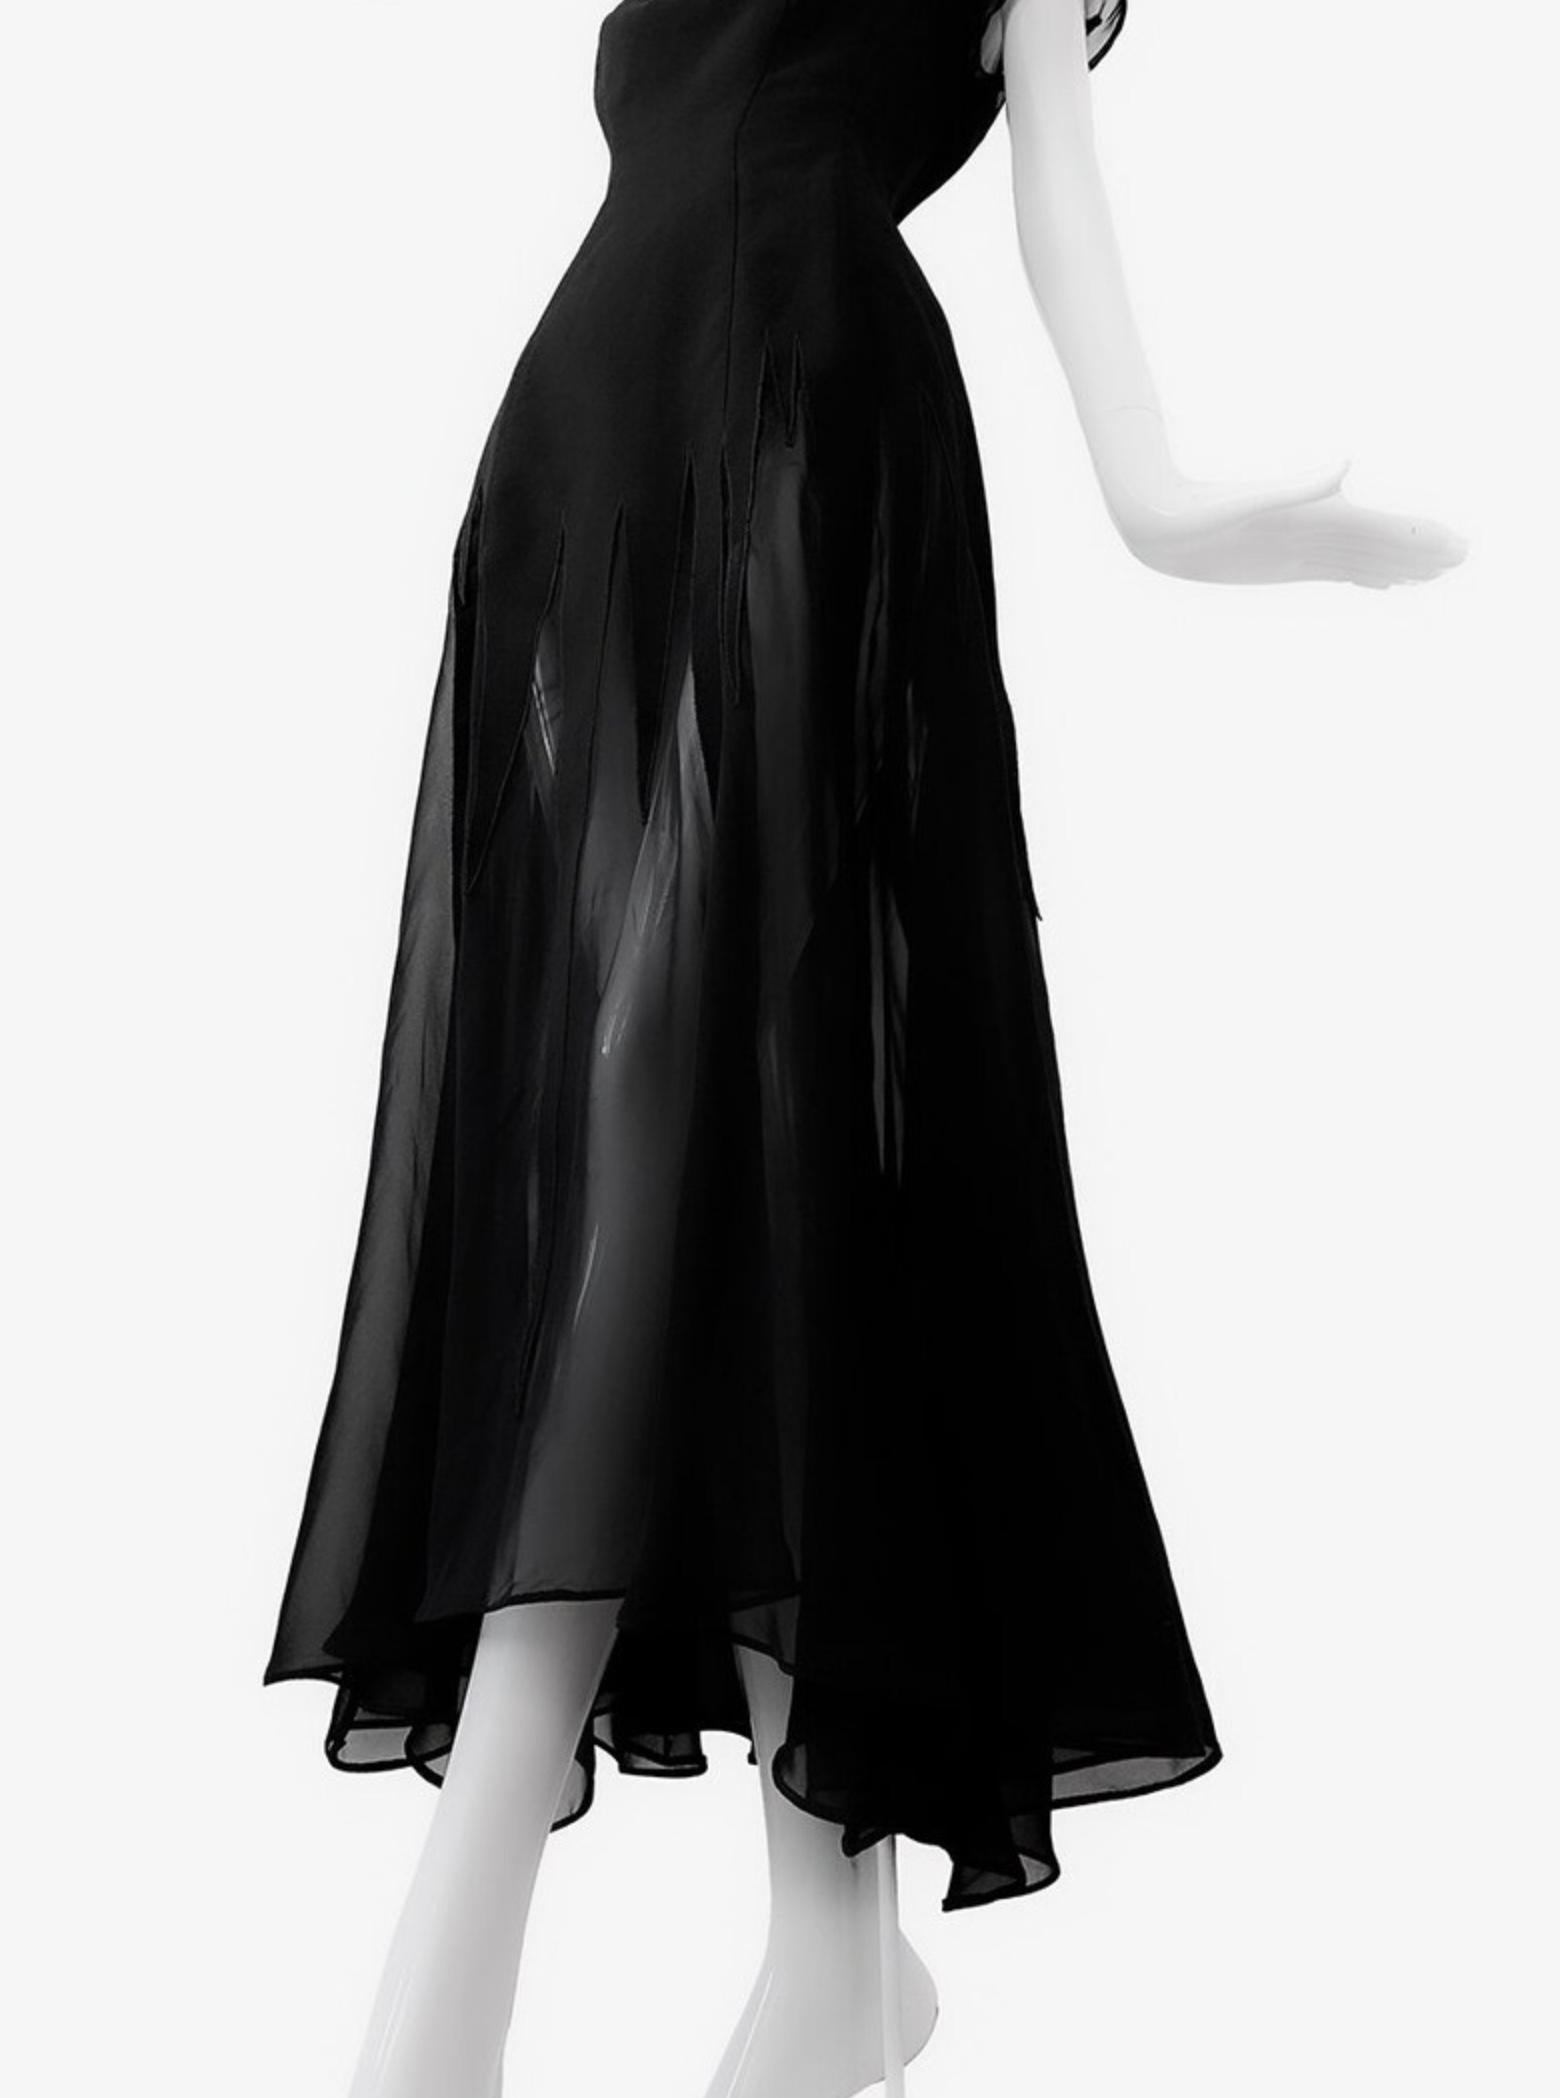 Devine Thierry Mugler Runway Dress Goddess Black Semi Sheer Evening Gown  For Sale 2